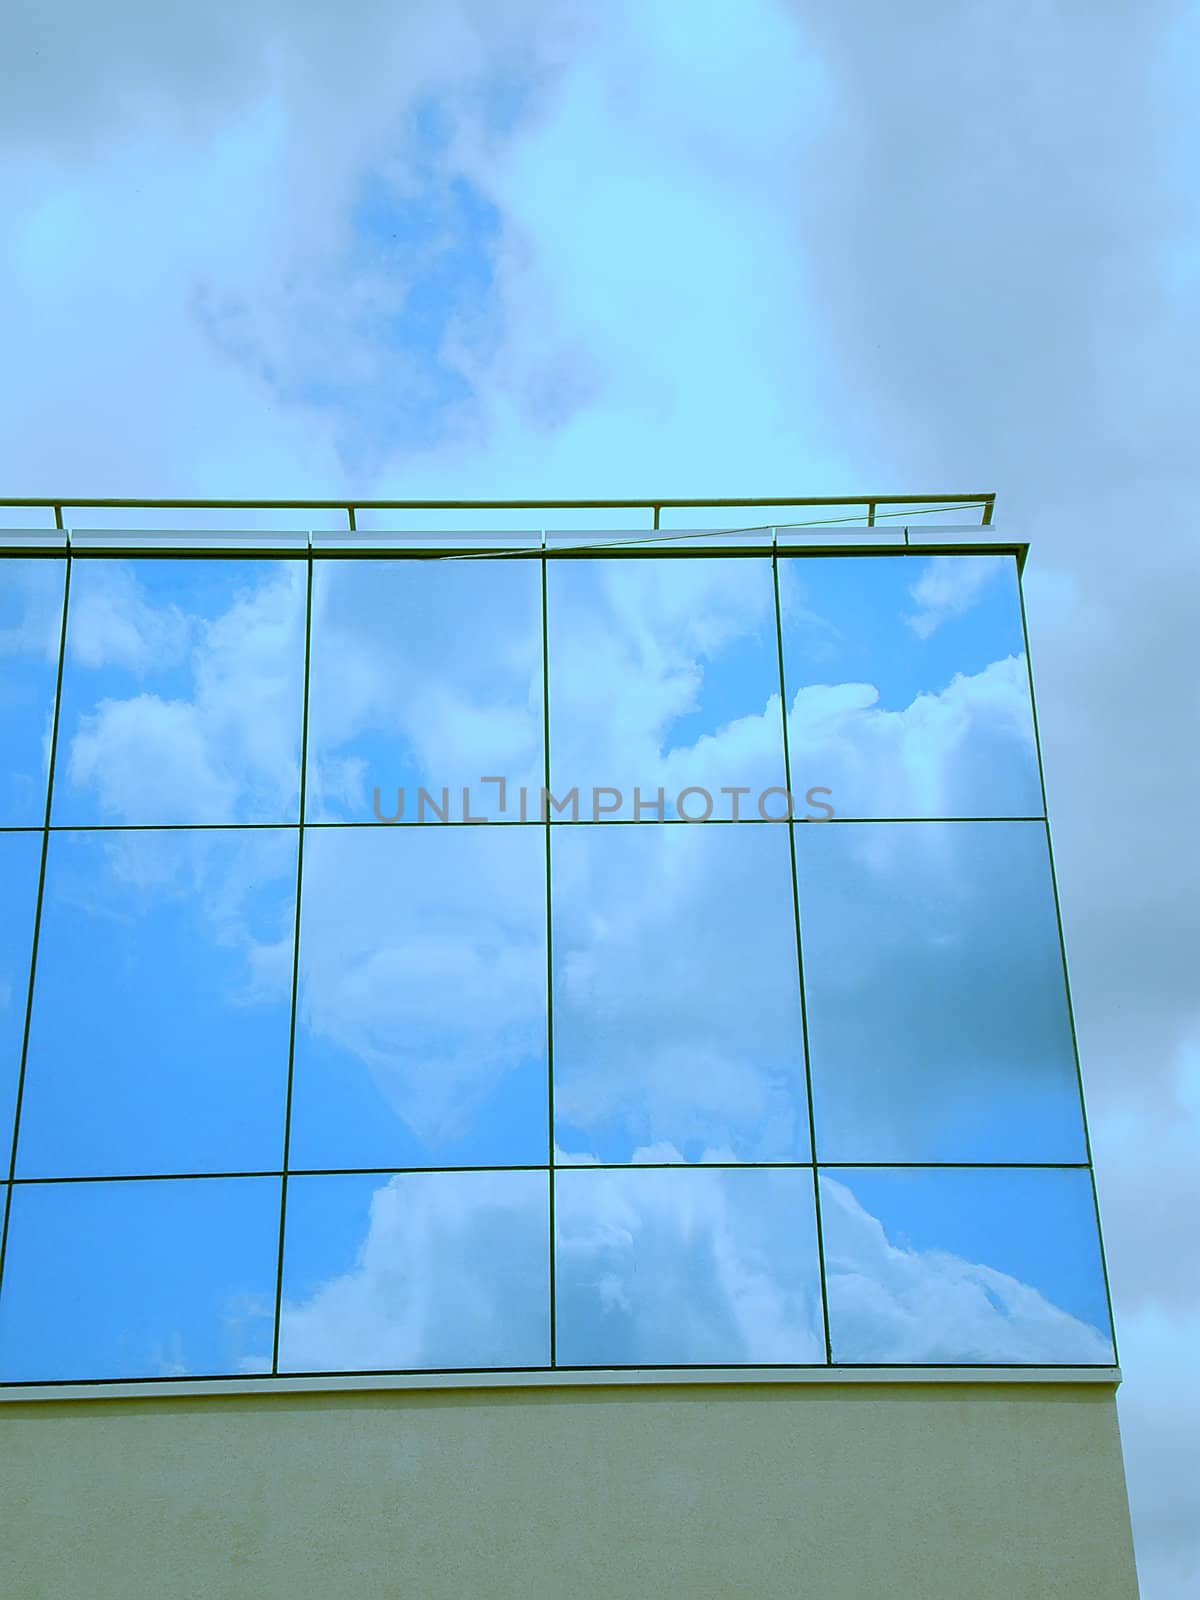 reflected sky on buildings windows